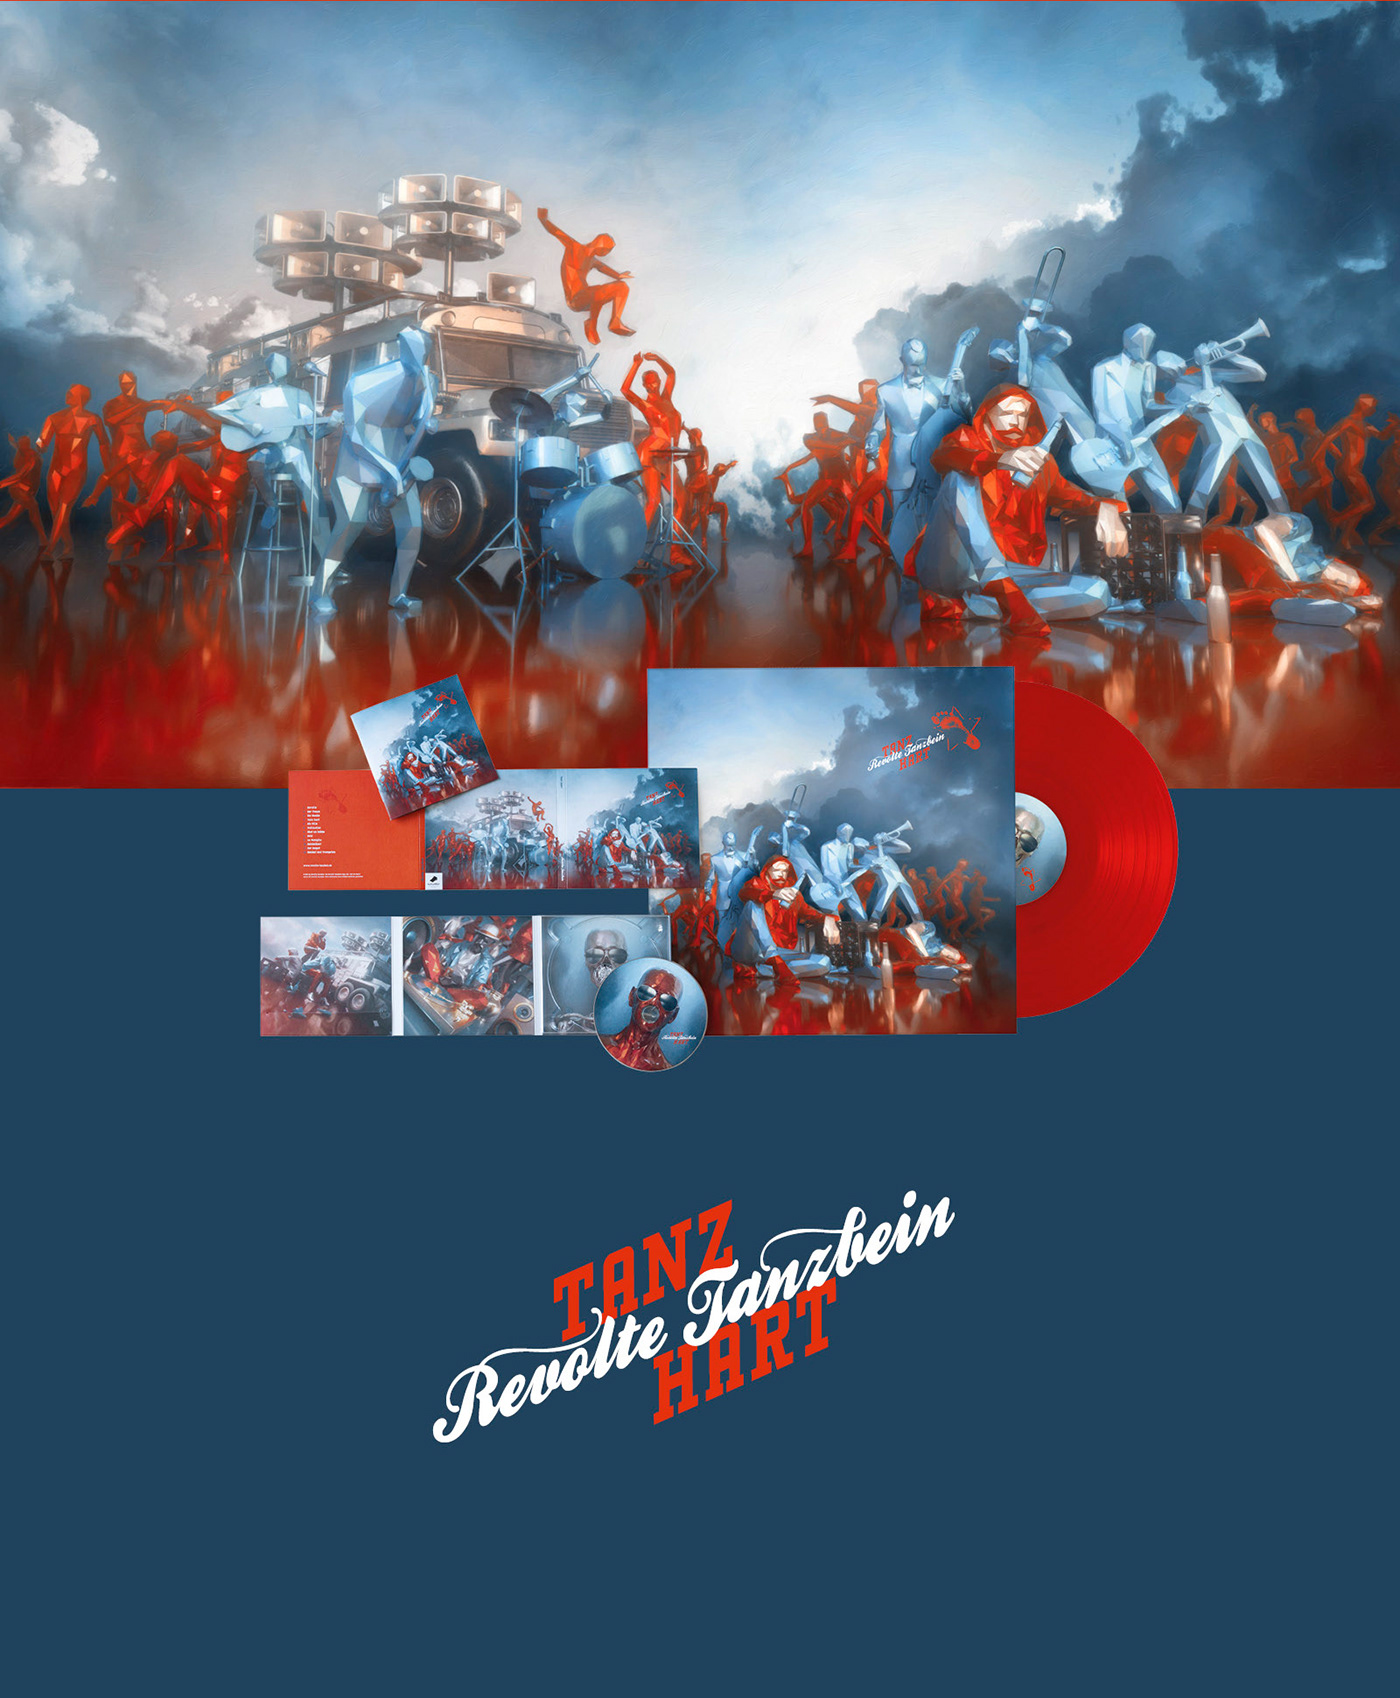 3D cover Frankfurt music record red Revolte Tanzbein sleeve vinyl